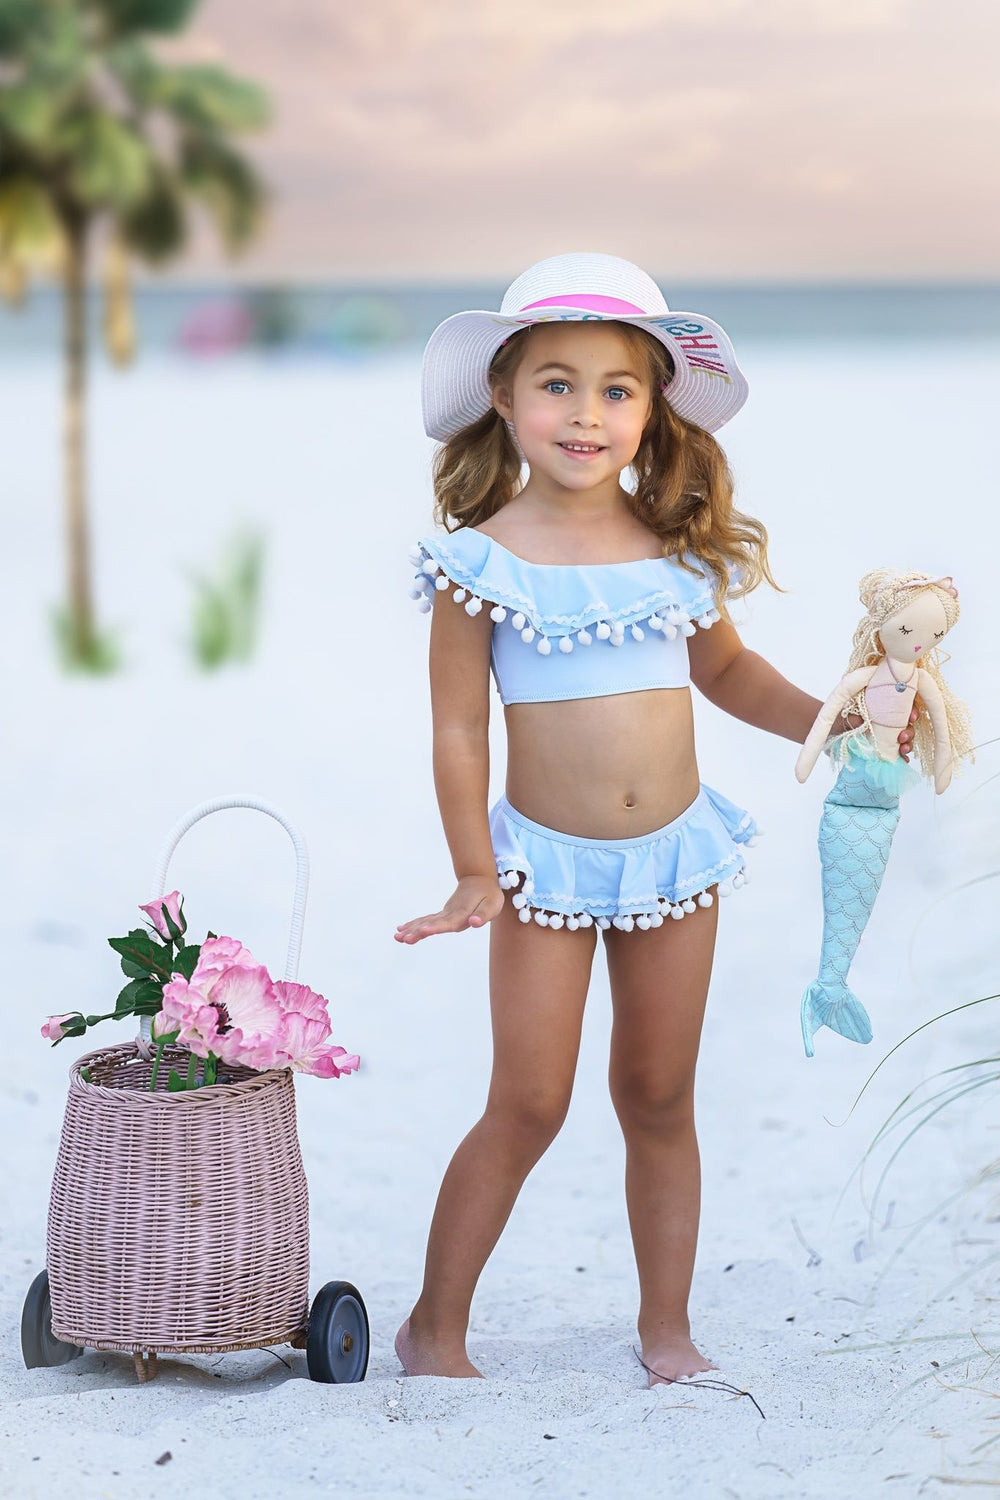 Blue & White Pom-Pom Two- Piece Girls Swimsuit - Trendy Bathing Suit for Cruise Wear & Summer Fun| Girls' Swimwear - Sophia Rose Children's Boutique